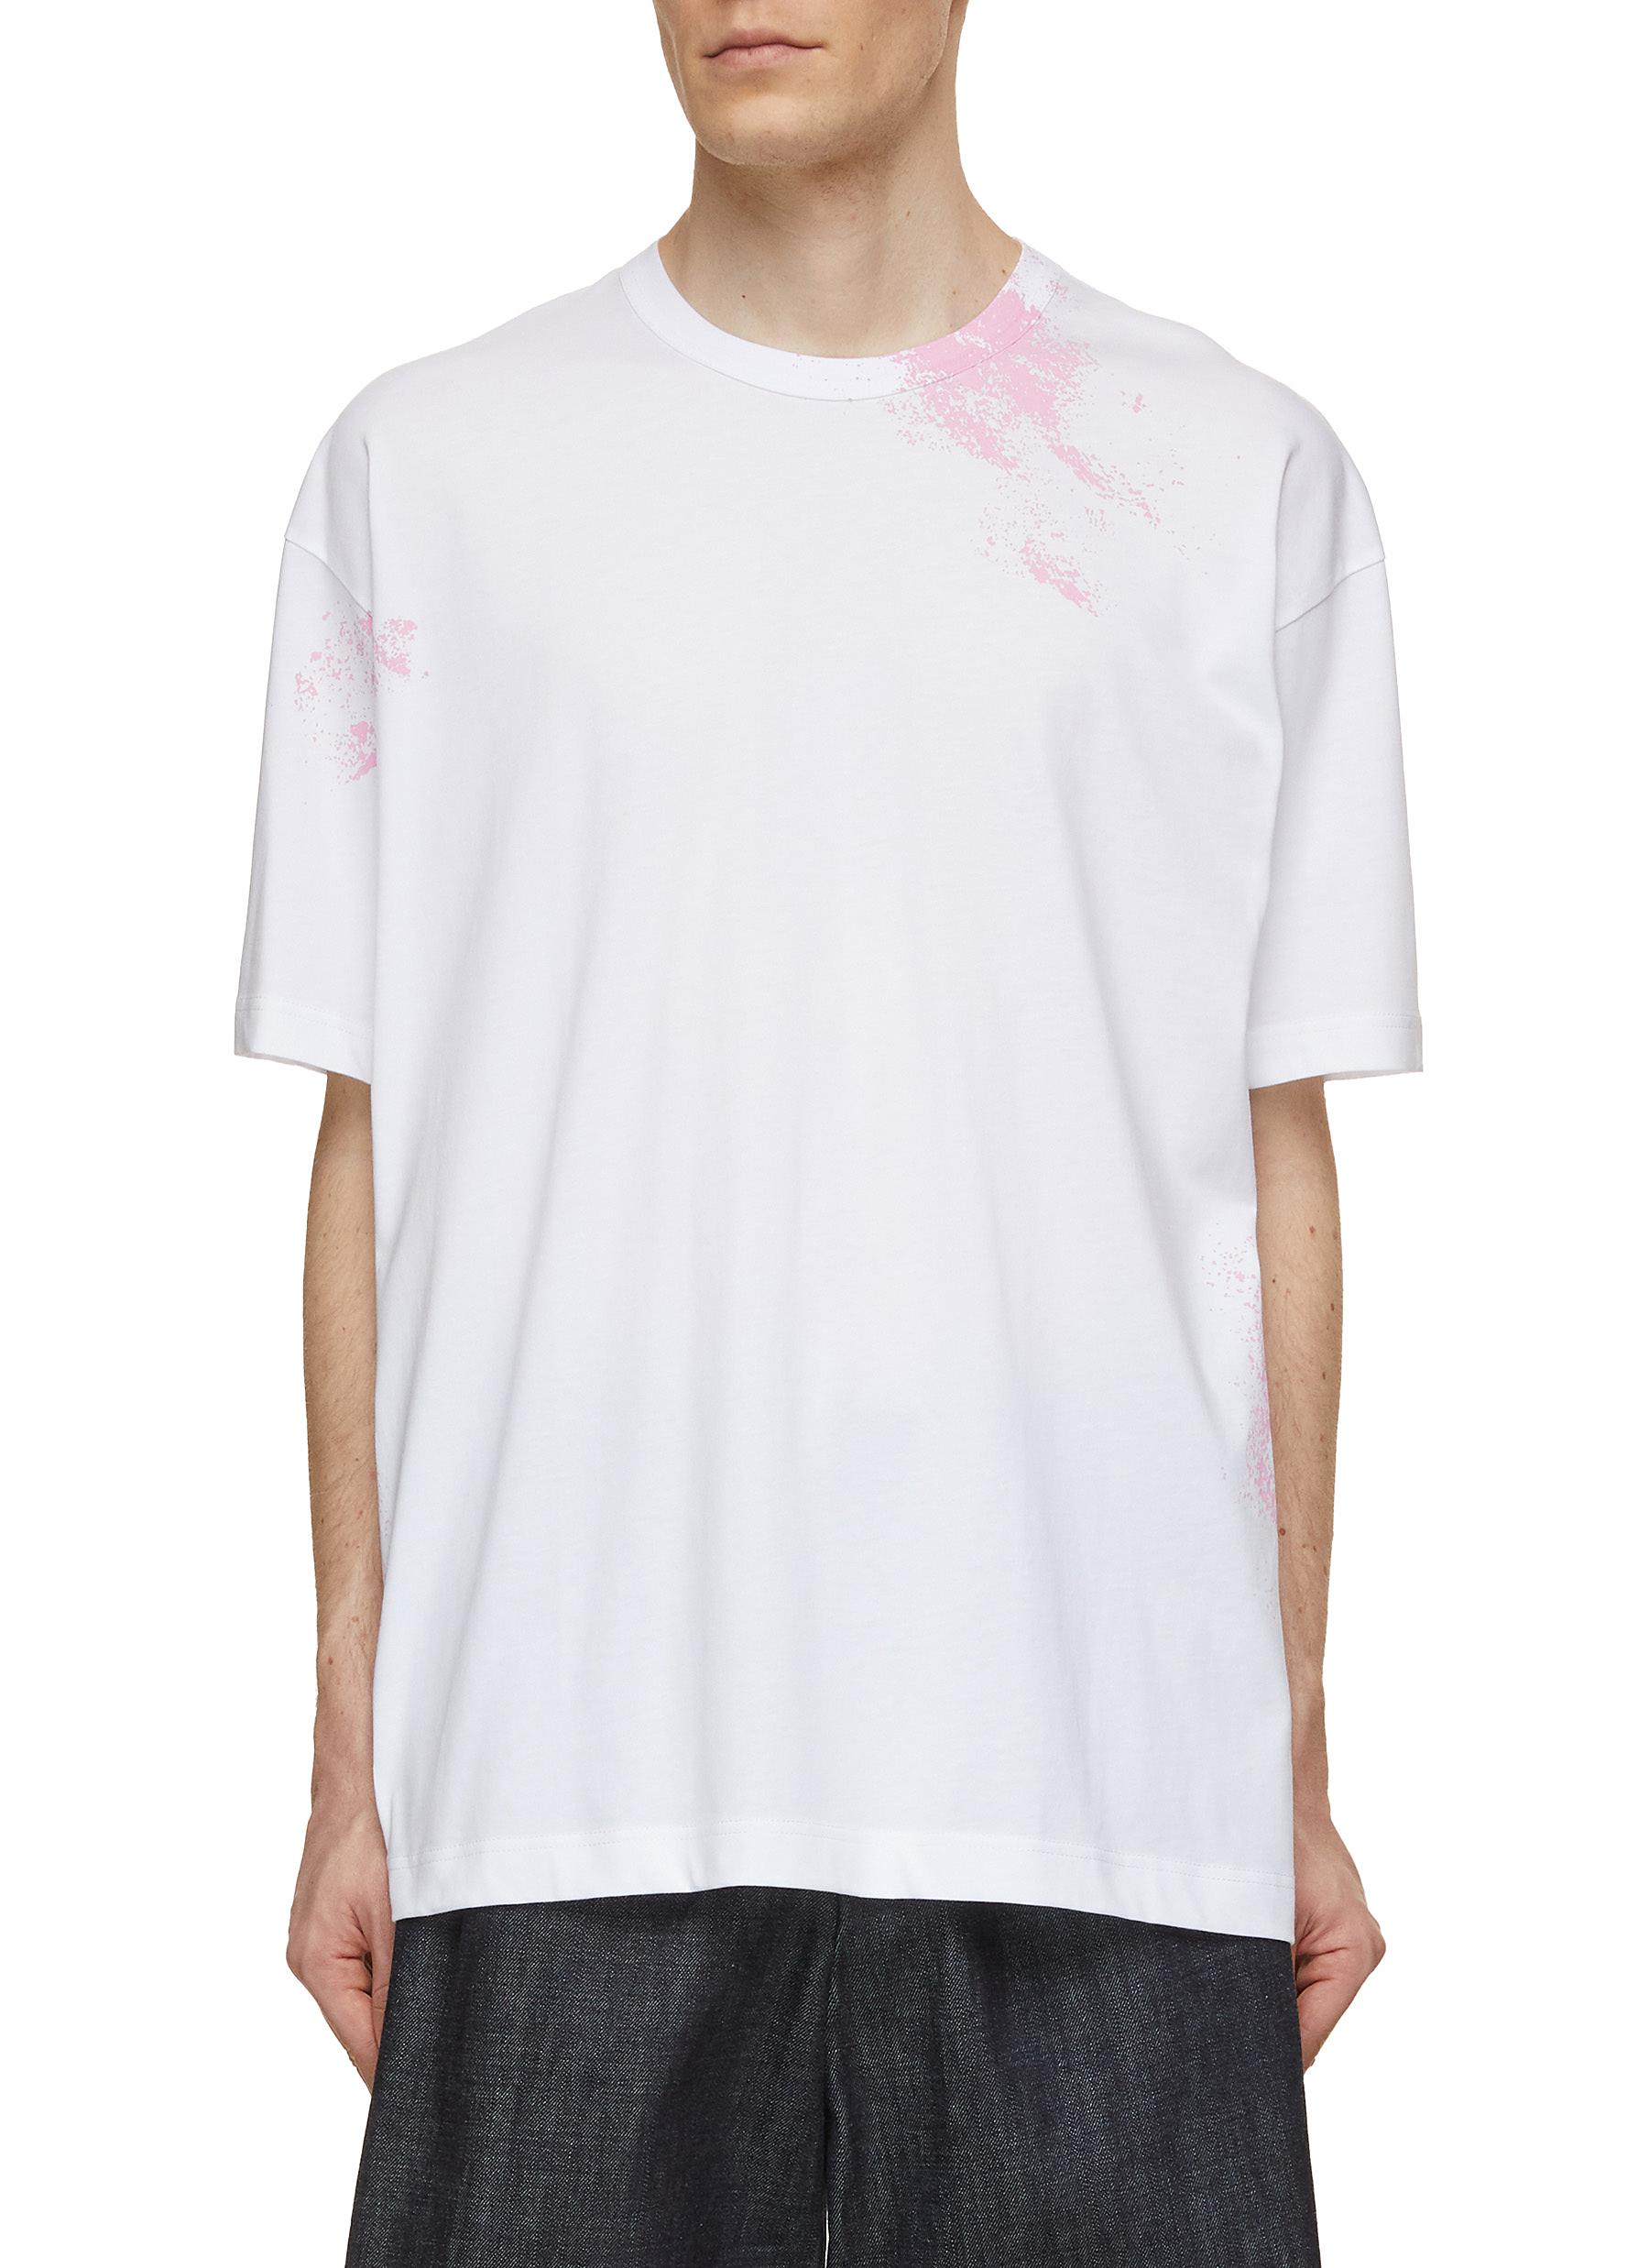 Splotch Print Cotton T-Shirt